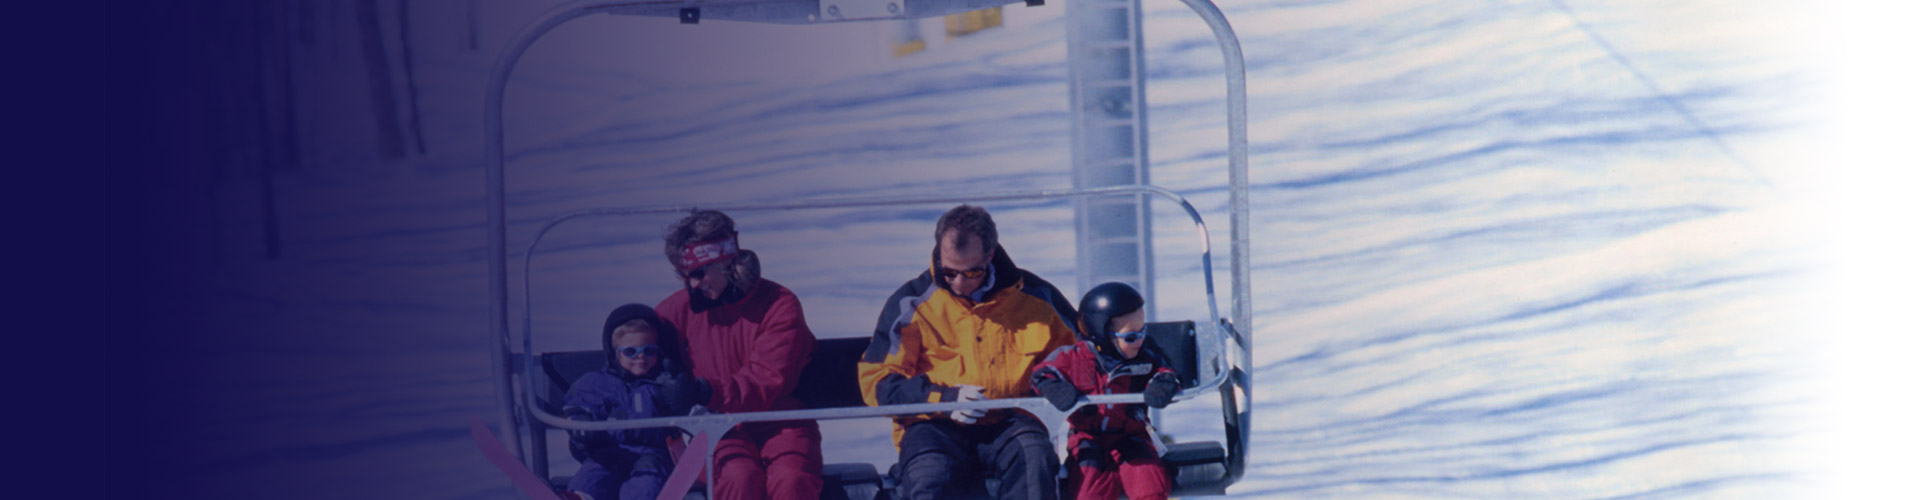 Featured Newsroom Ski Lift